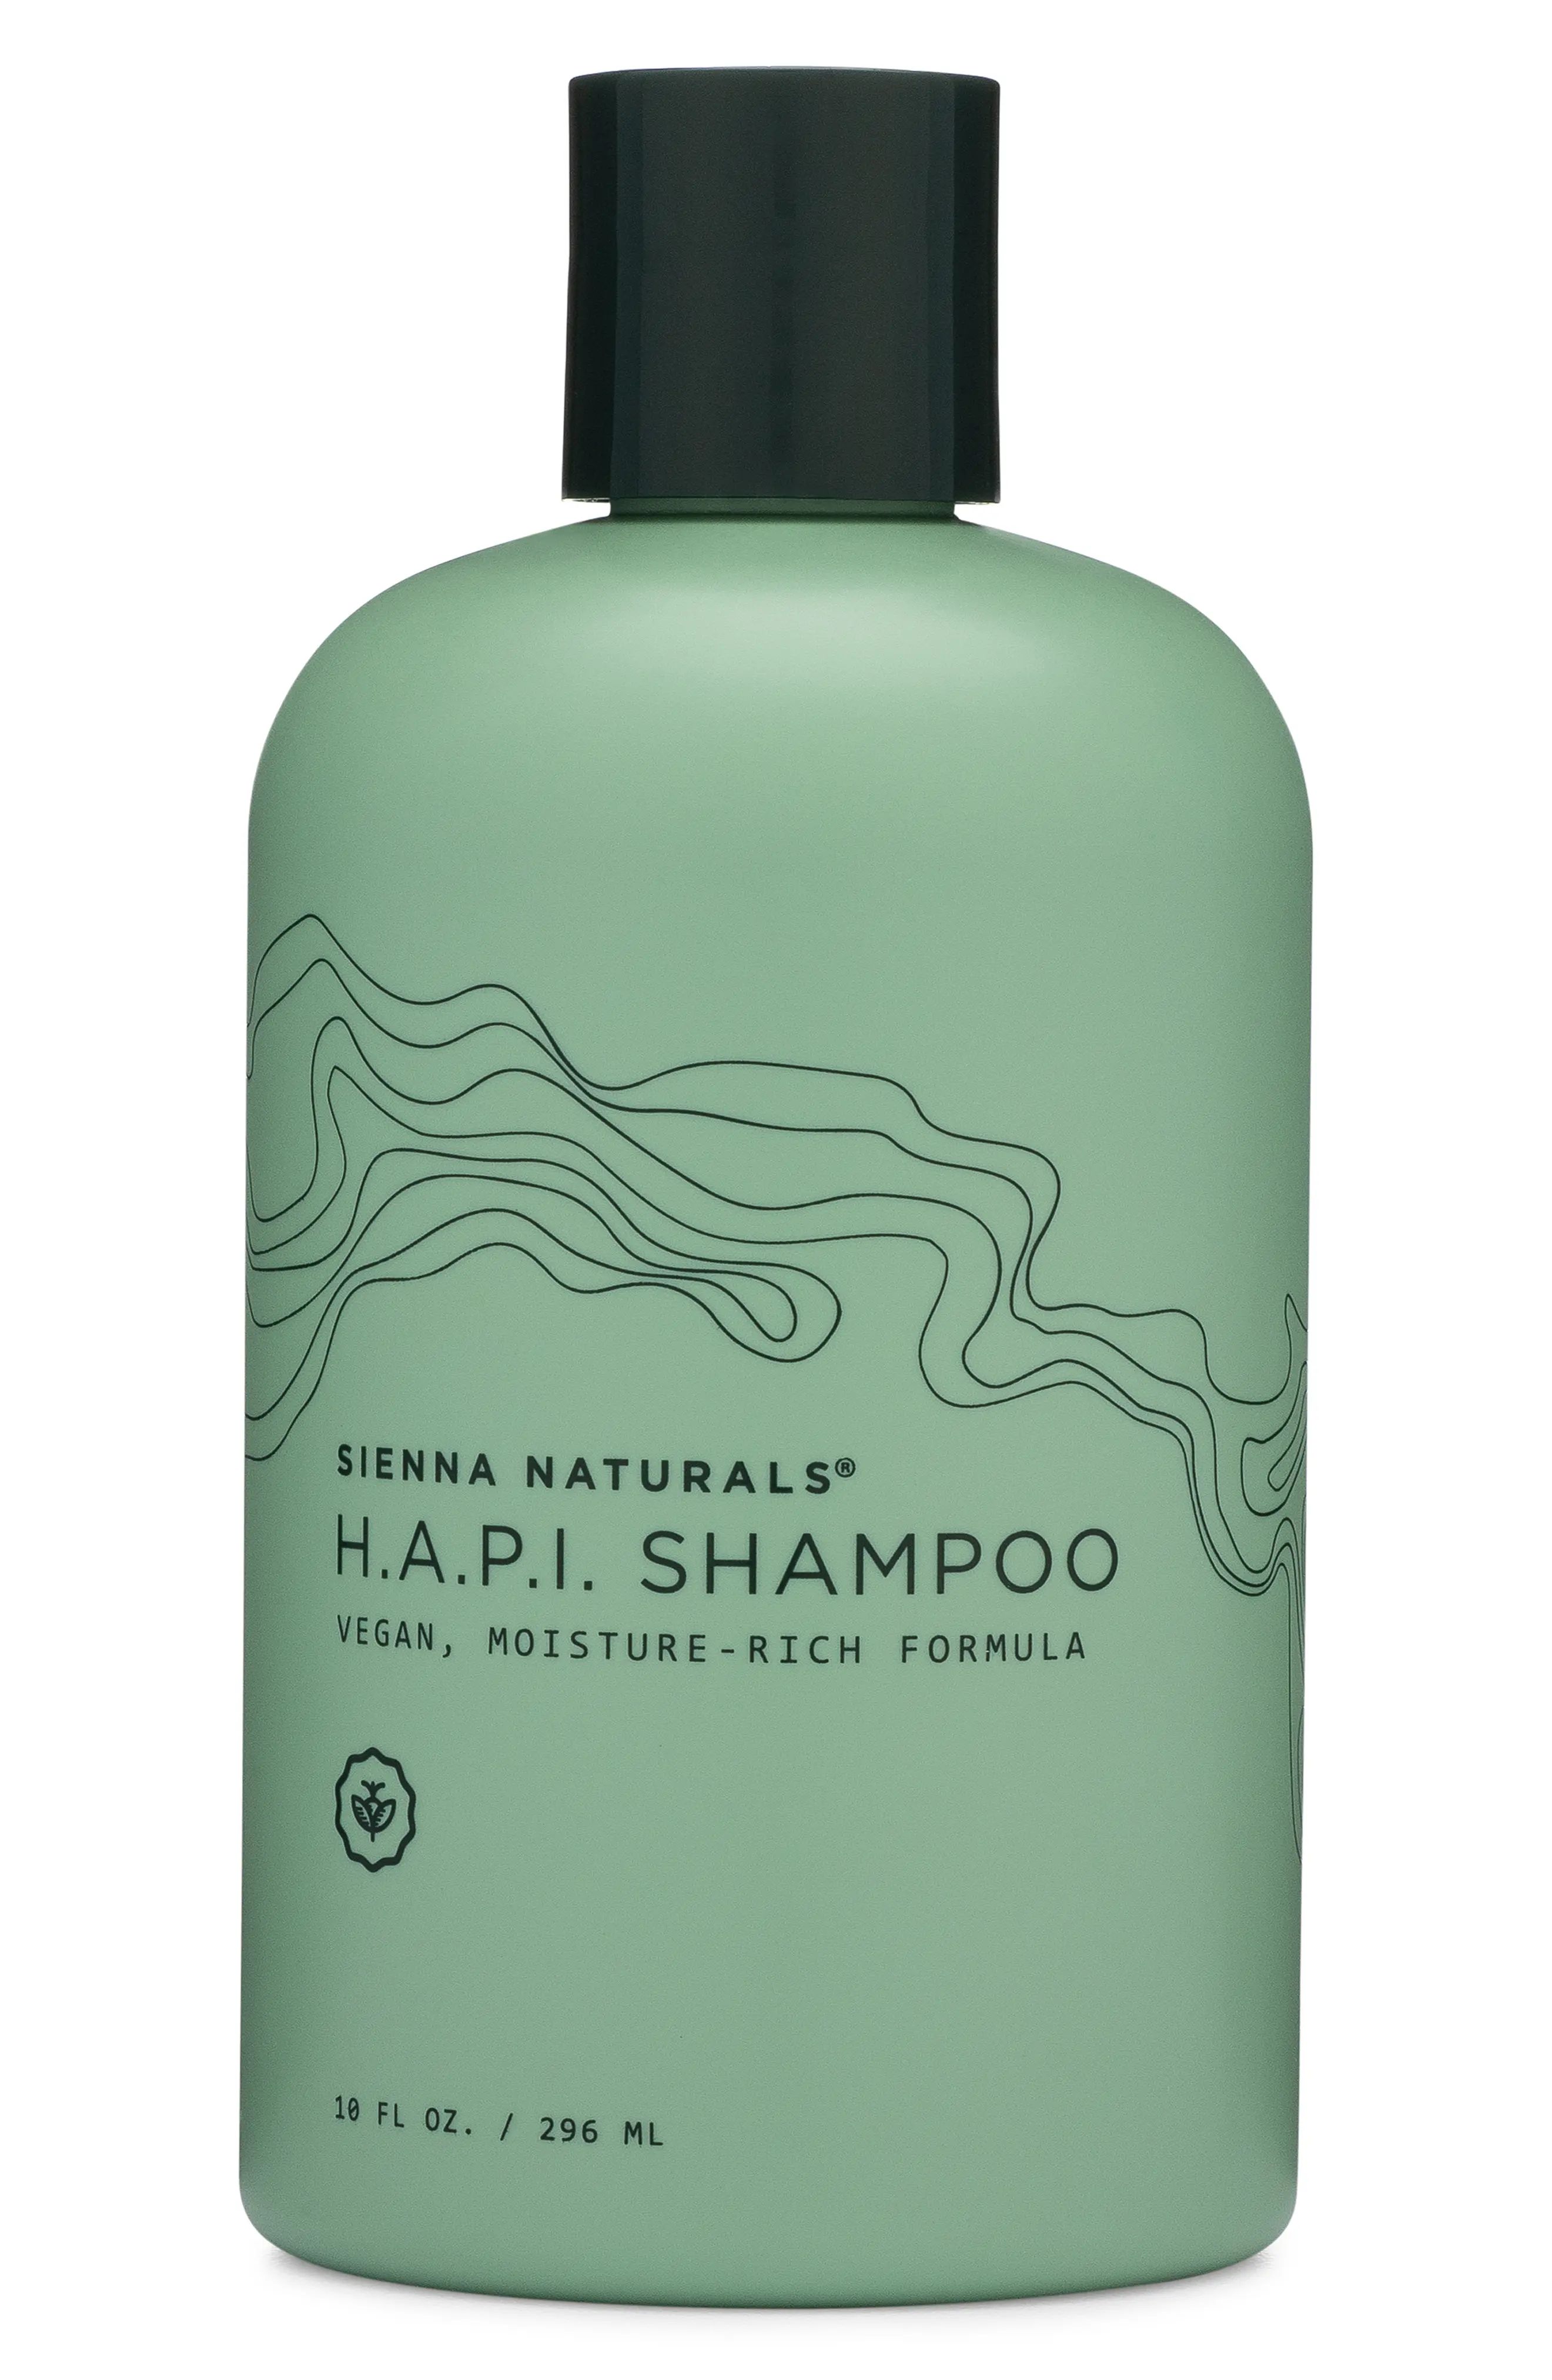 Sienna Naturals H.a.p.i. Shampoo, Size 10 oz | Nordstrom